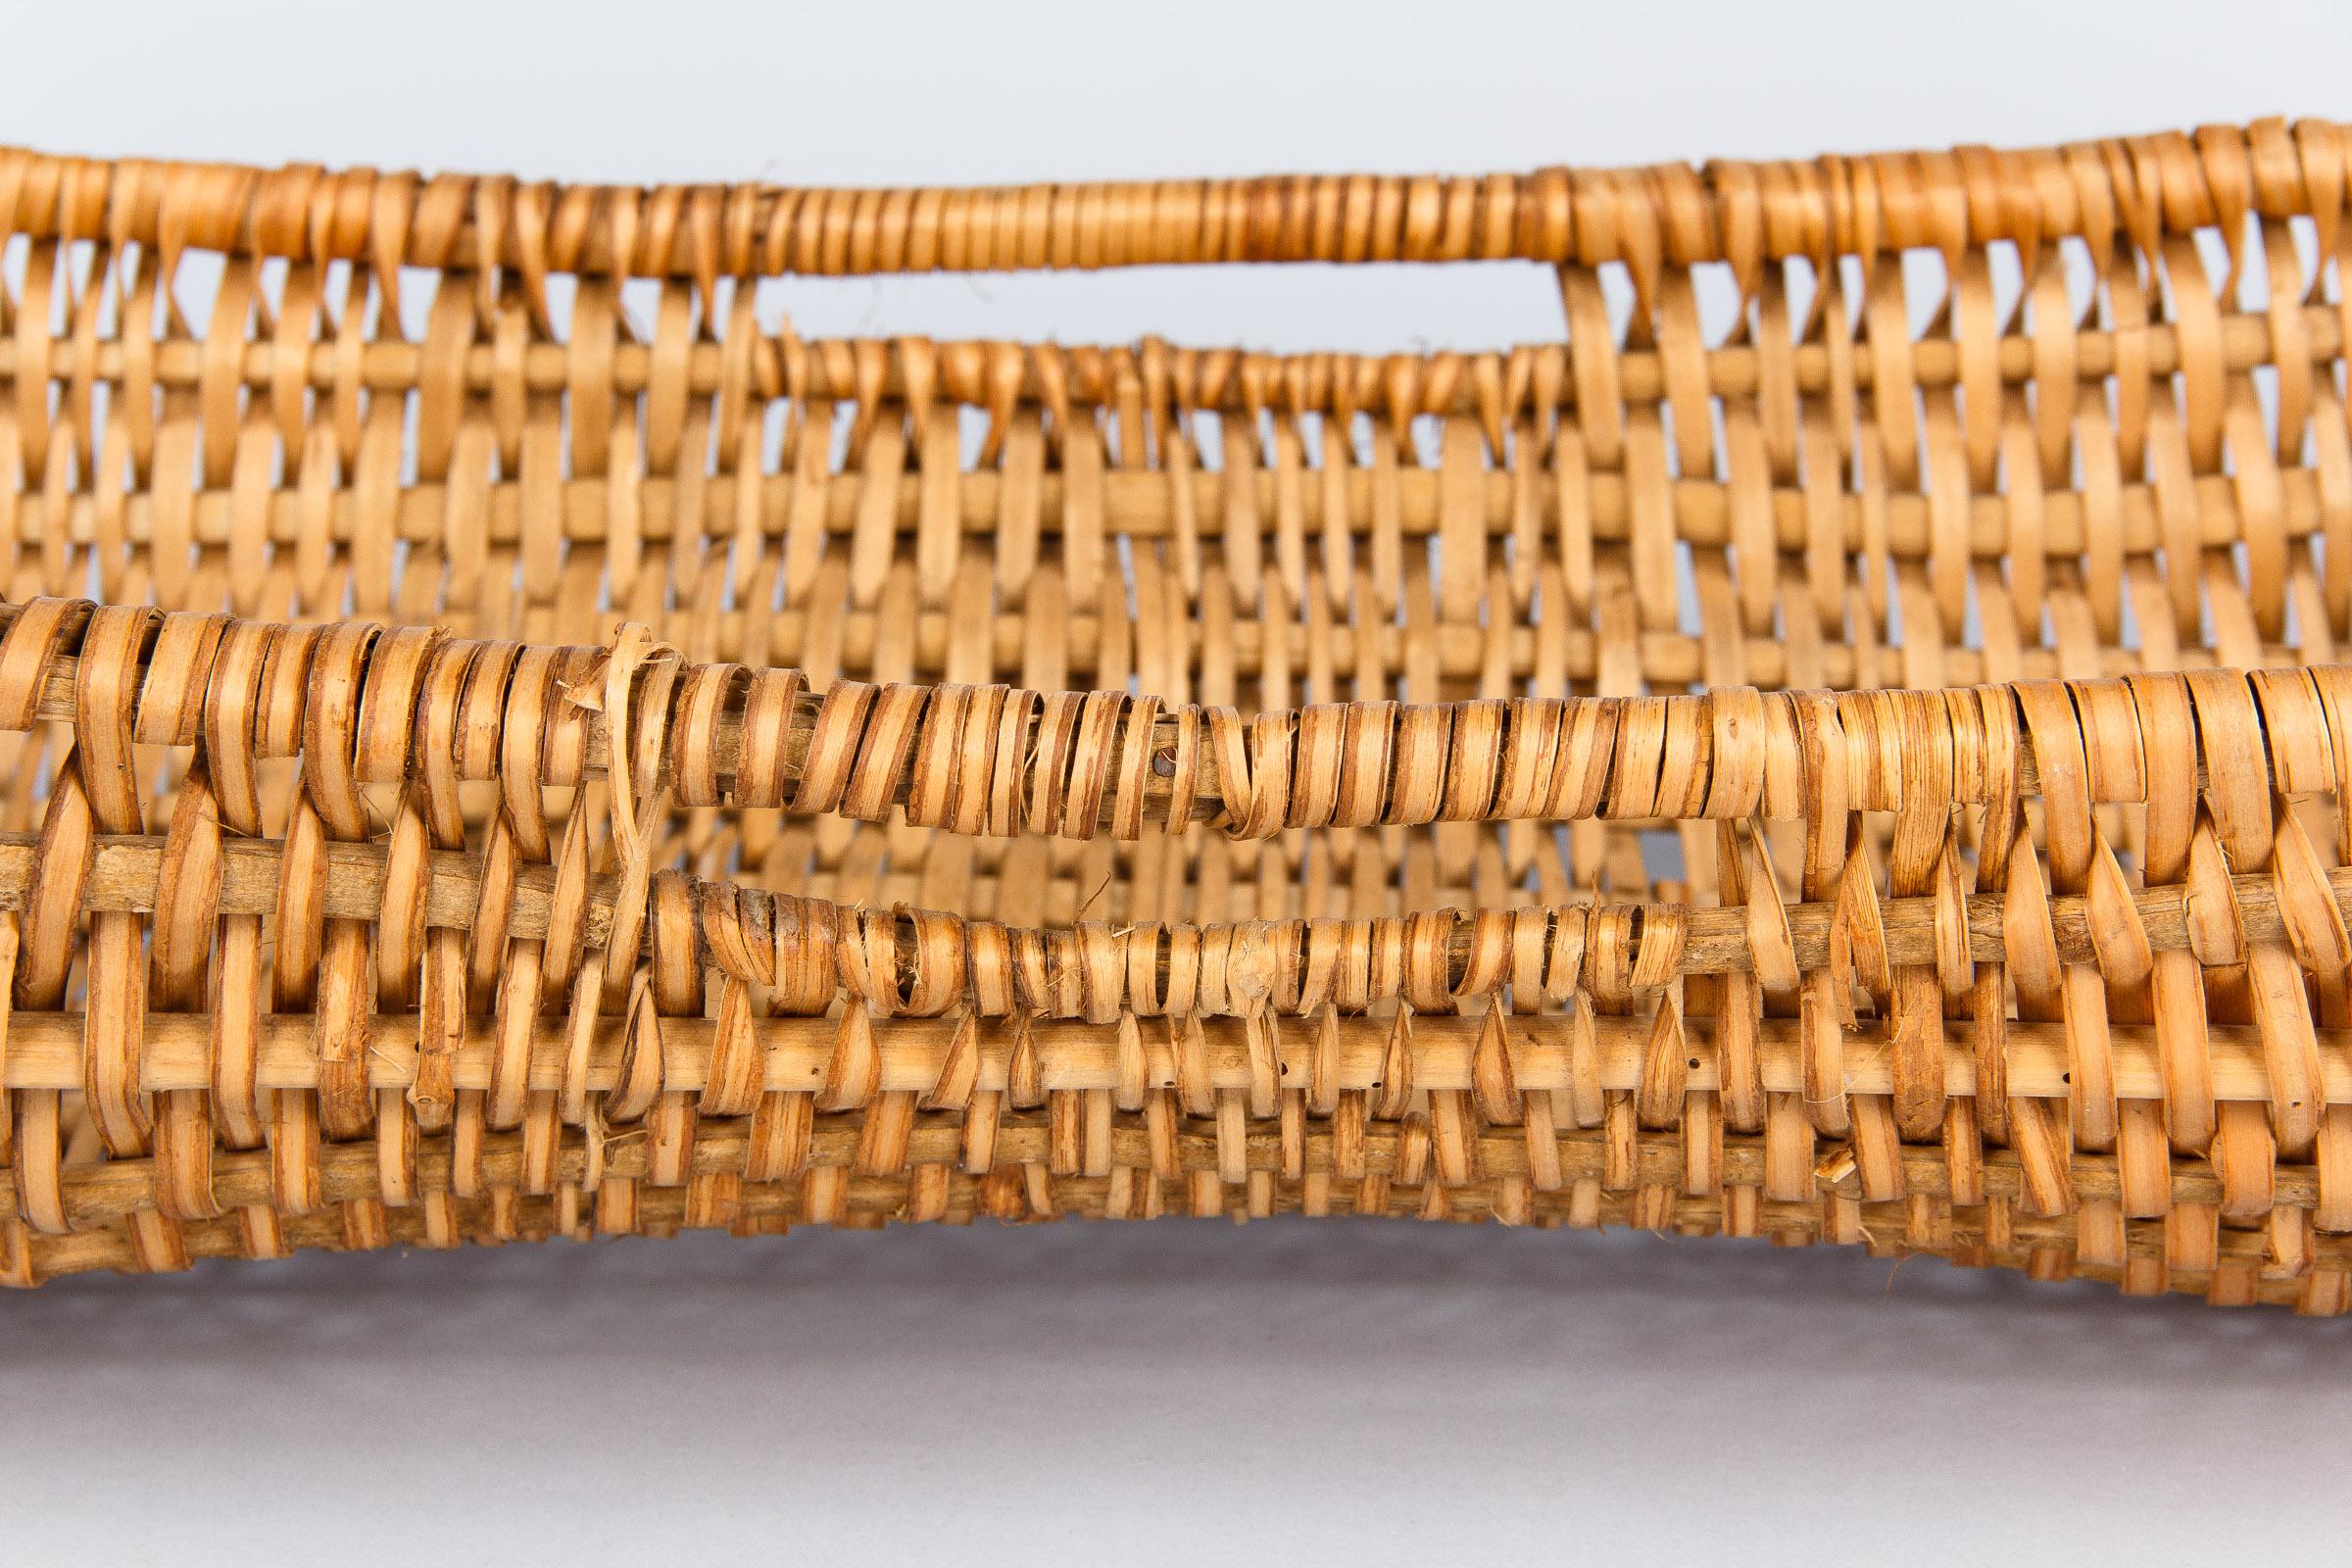 20th Century Vintage French Wicker Basket from Auvergne Region